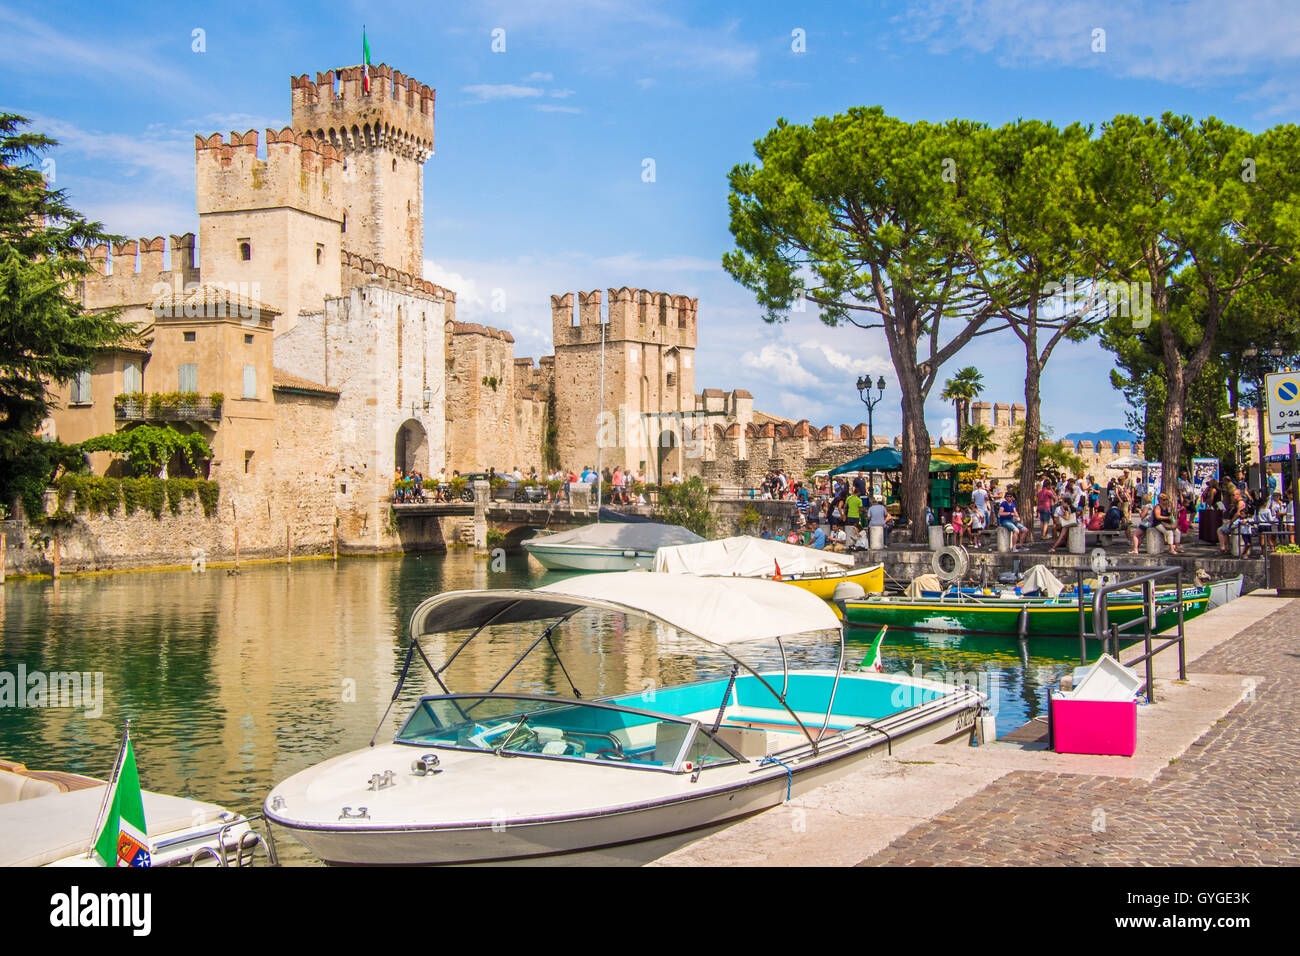 Castle Scaligero, Sirmione, Lake Garda, Brescia province, Lombardy region, Italy. Stock Photo